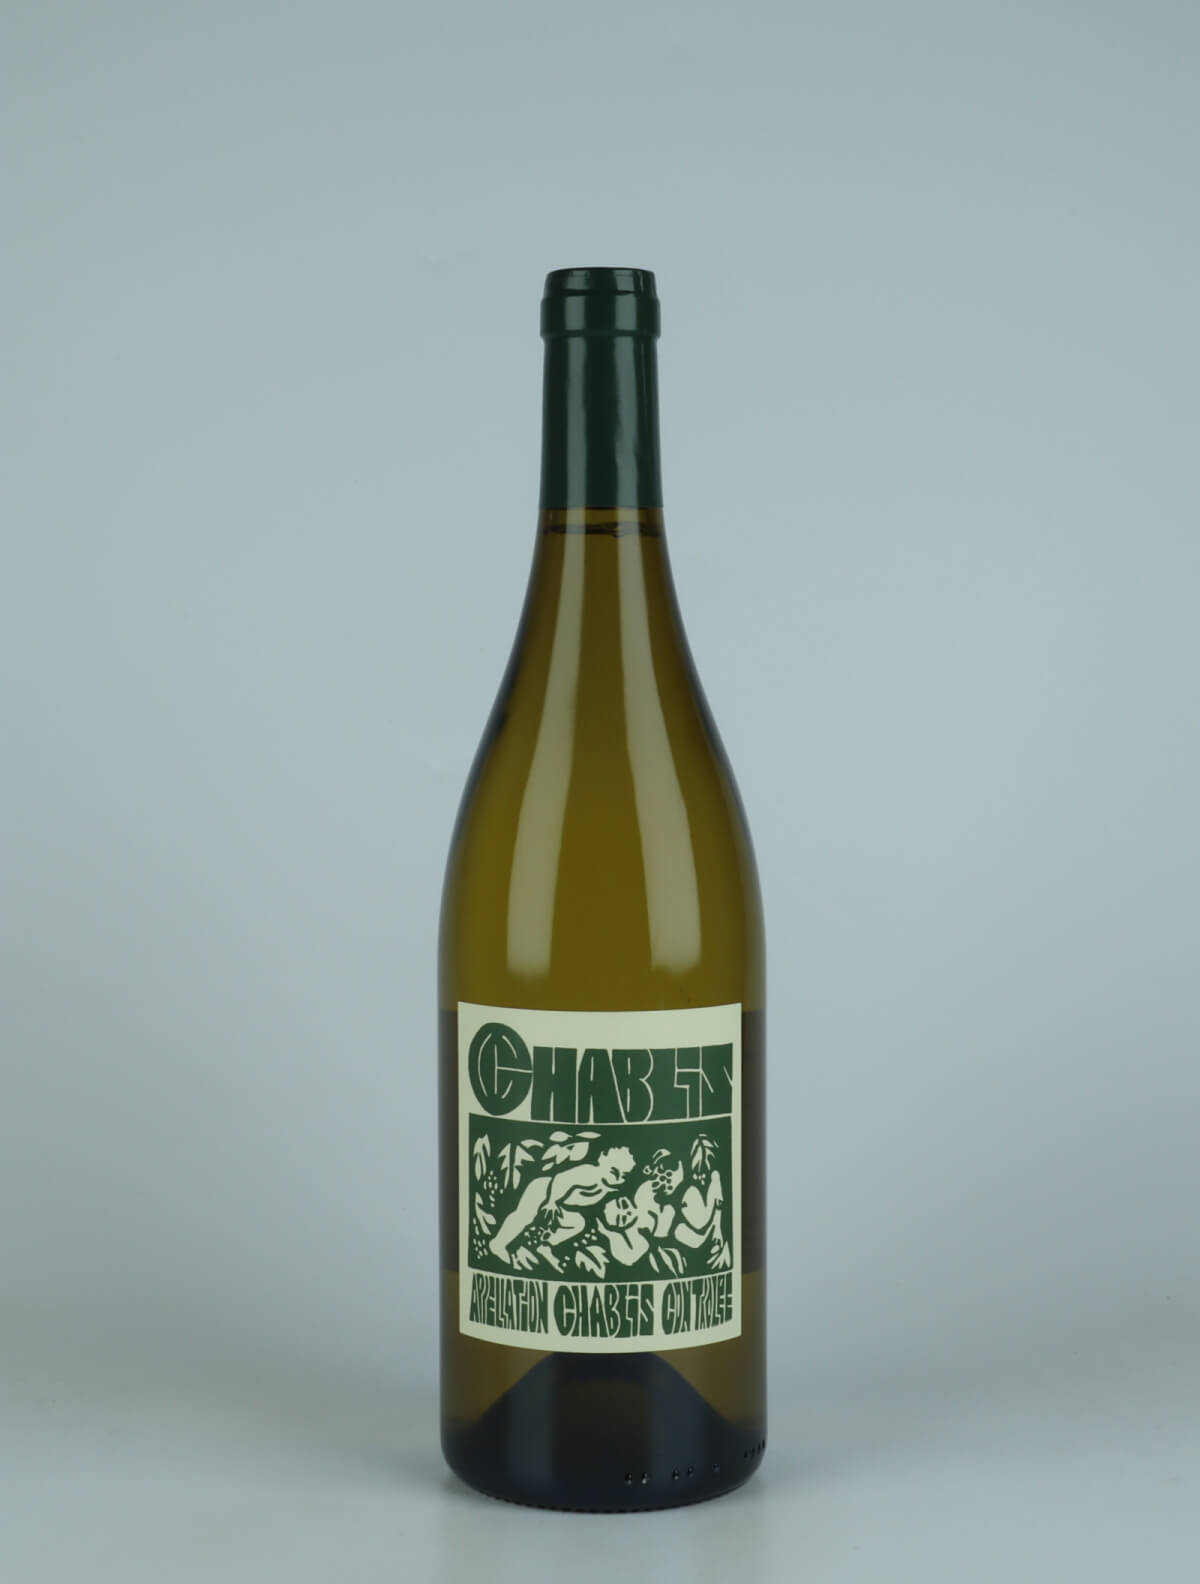 A bottle 2022 Chablis White wine from La Sœur Cadette, Burgundy in France